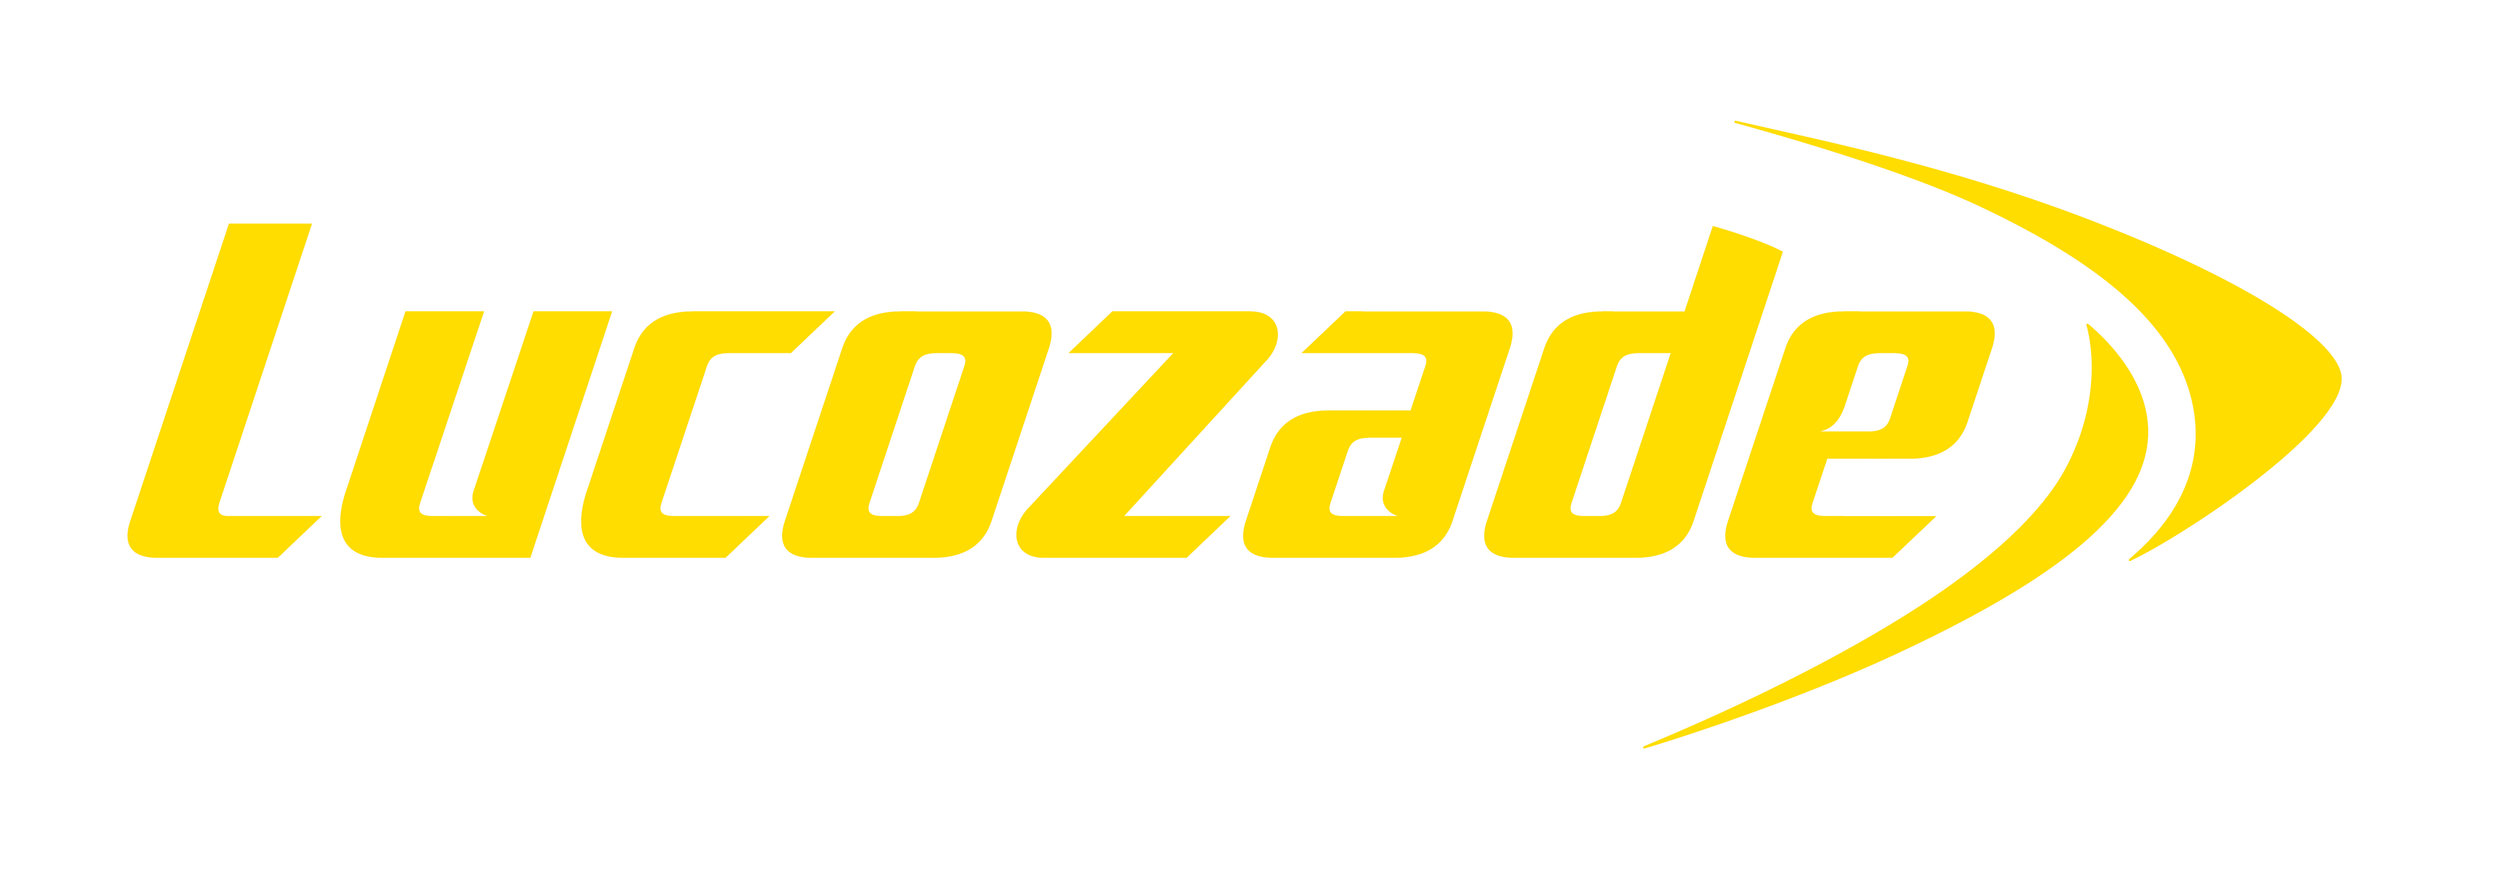 Lucozade_master_logo_yellow.jpg